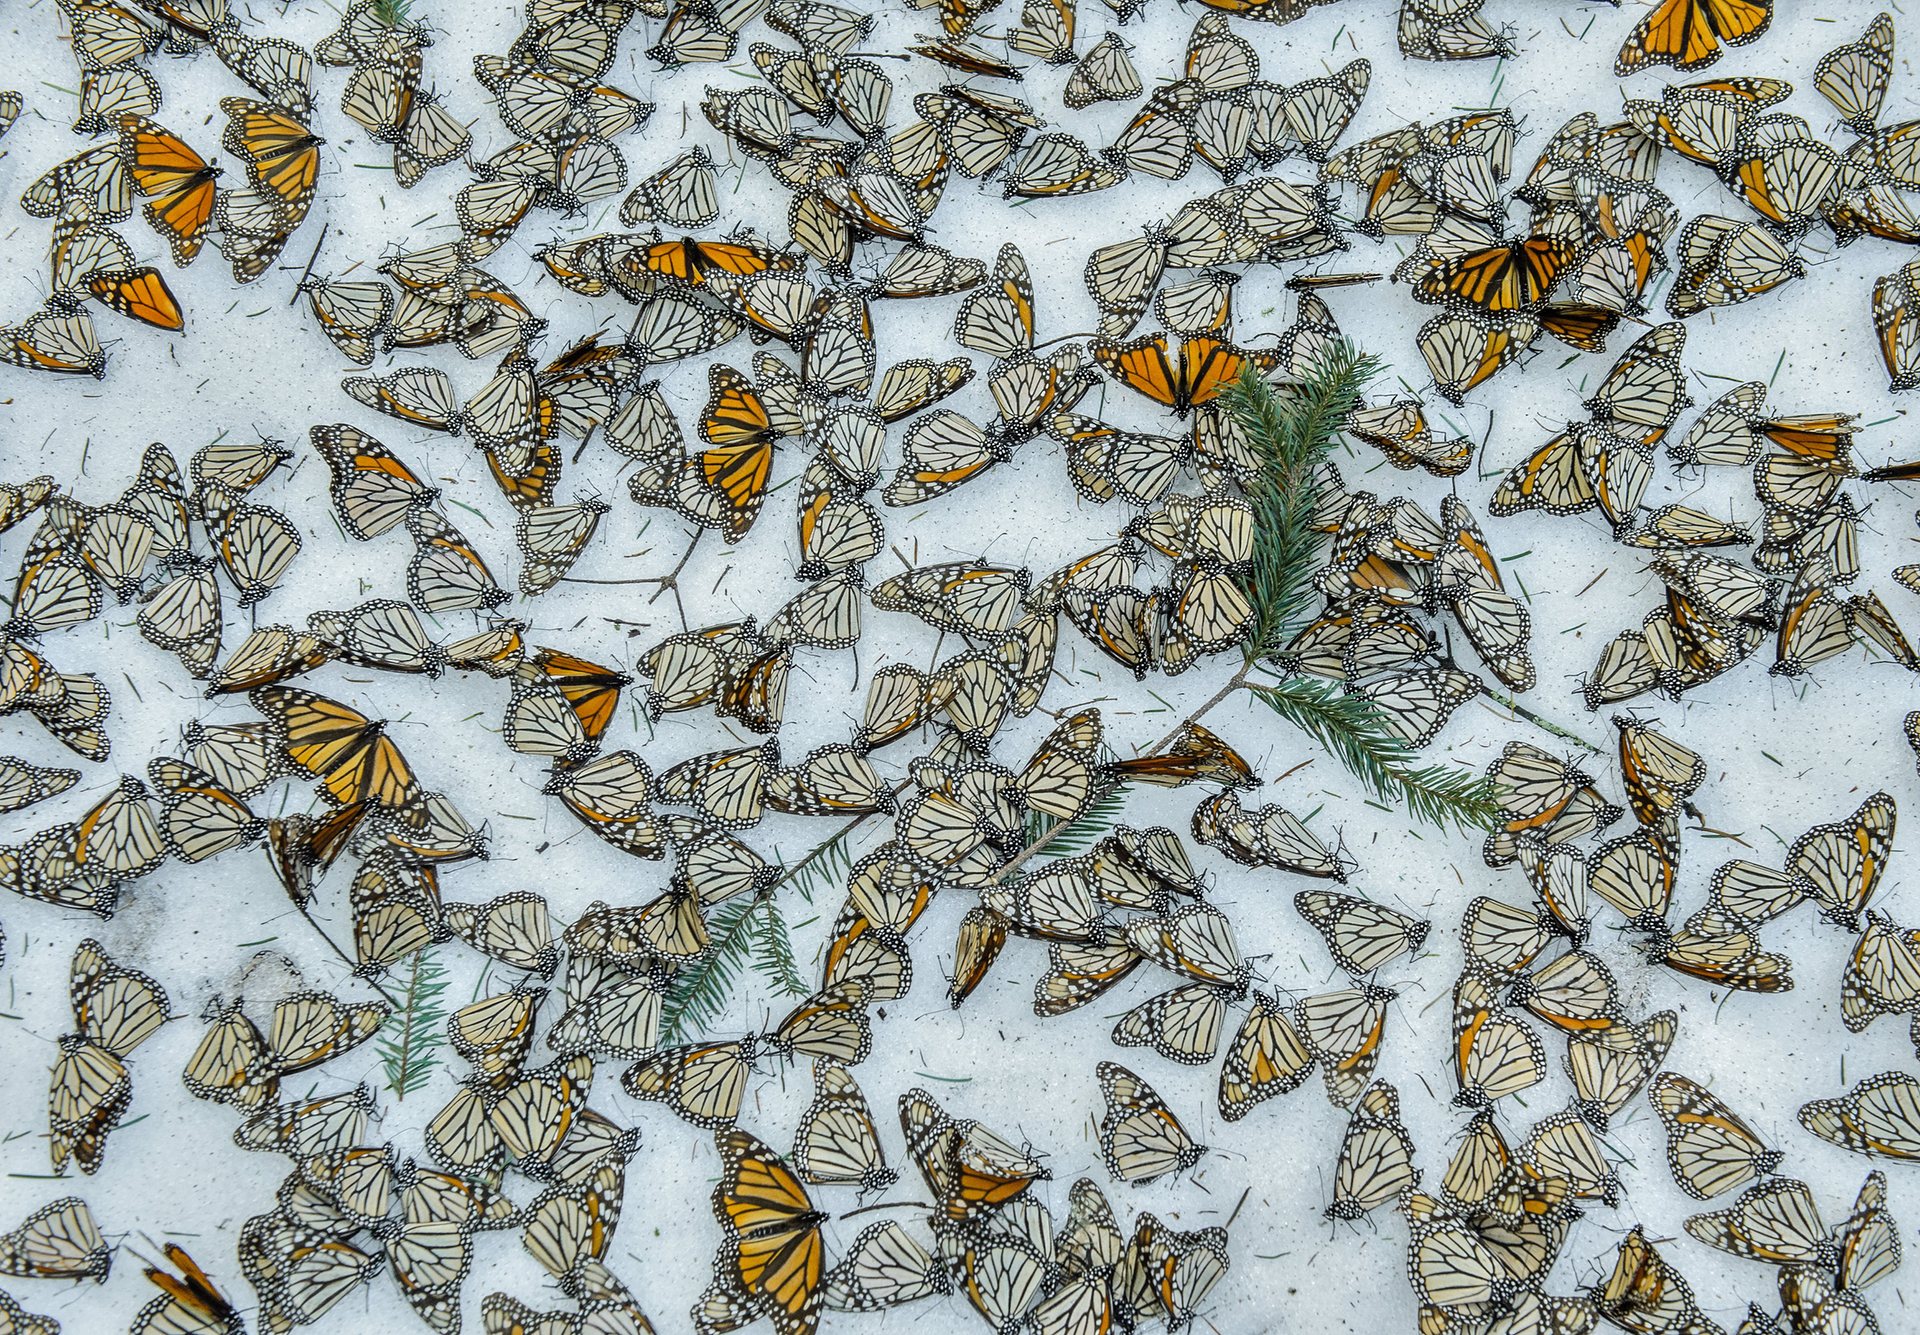  Nature â singles, third prize Monarch butterflies cover the forest floor of the Rosario butterfly sanctuary in MichoacÃ¡n, Mexico Photograph: Jaime Rojo/EPA